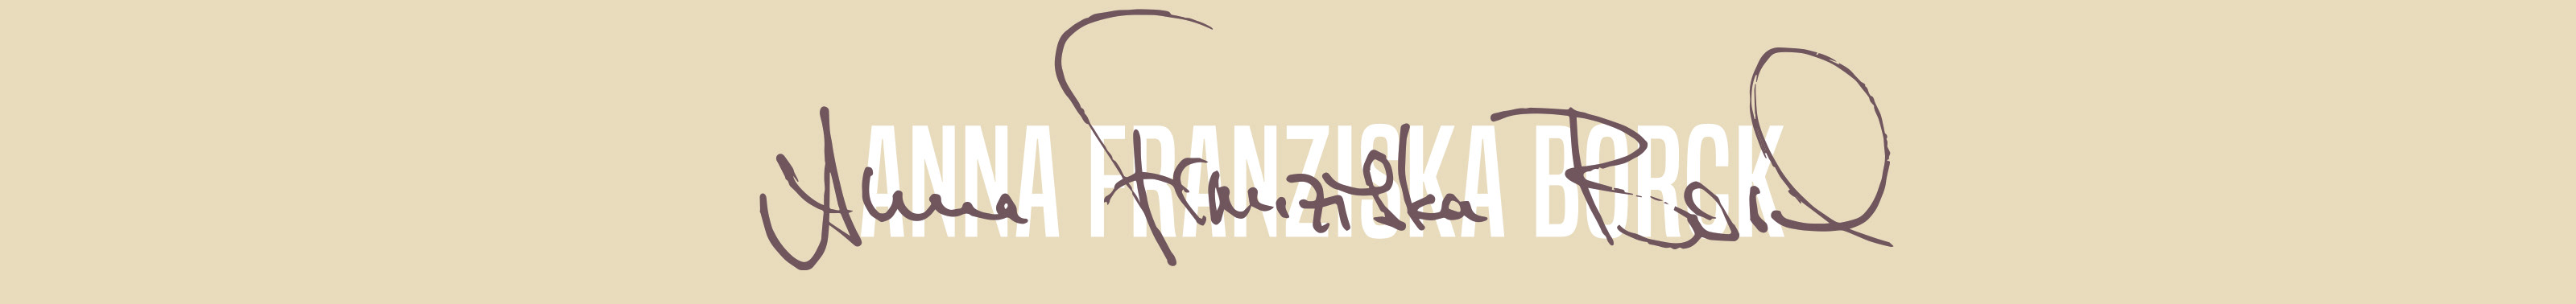 Anna Franziska Borck's profile banner